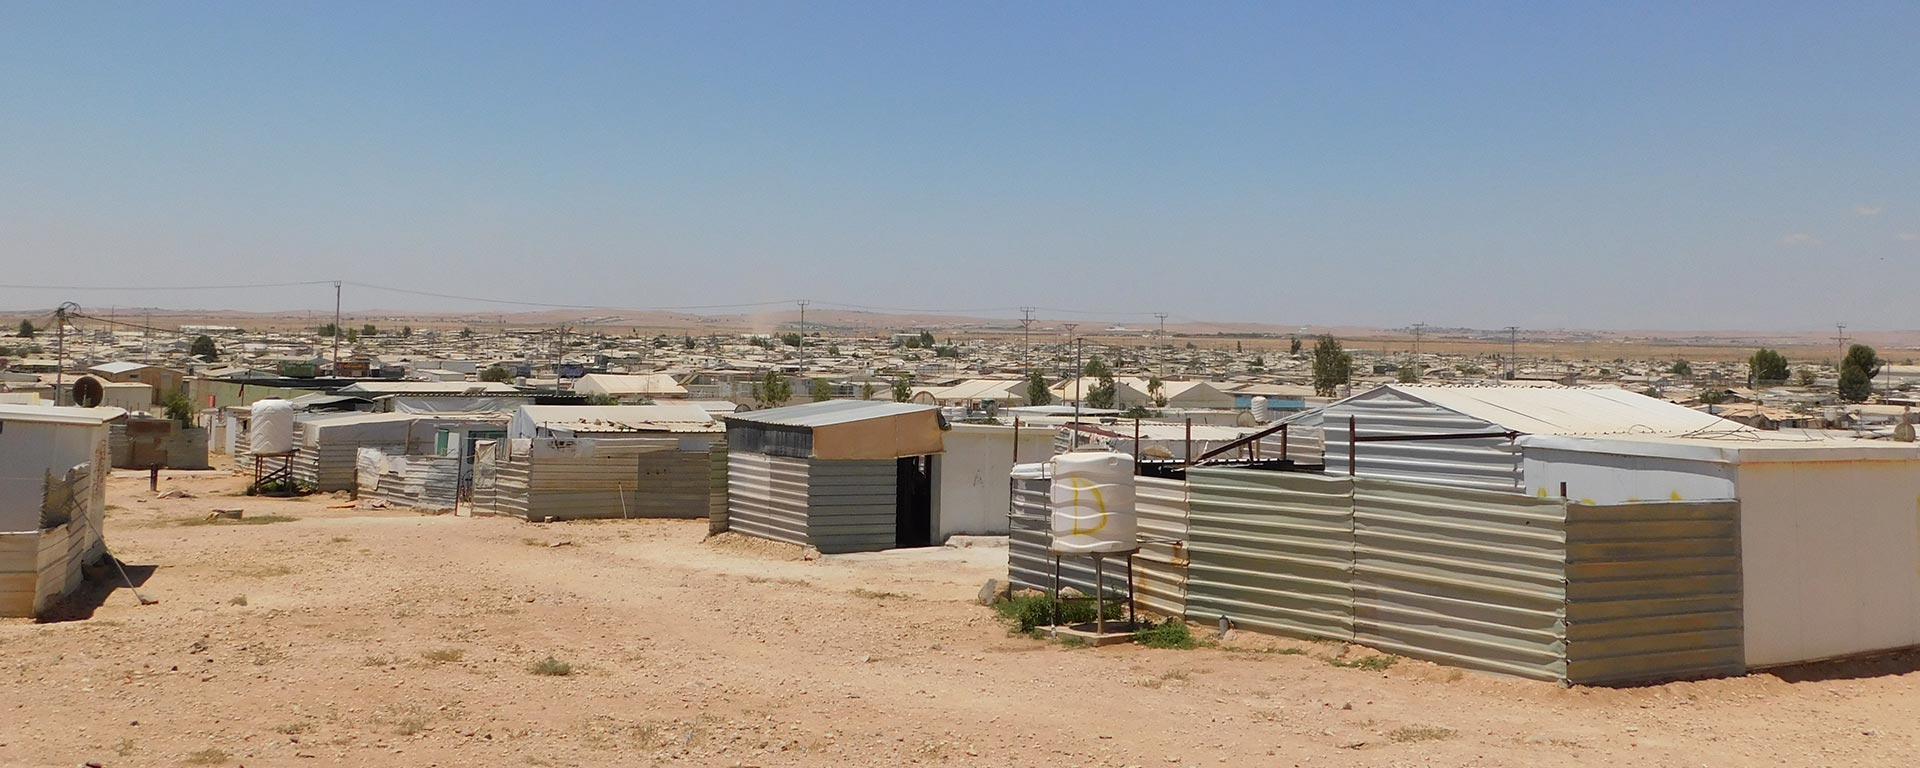 A Syrian refugee camp in Jordan.